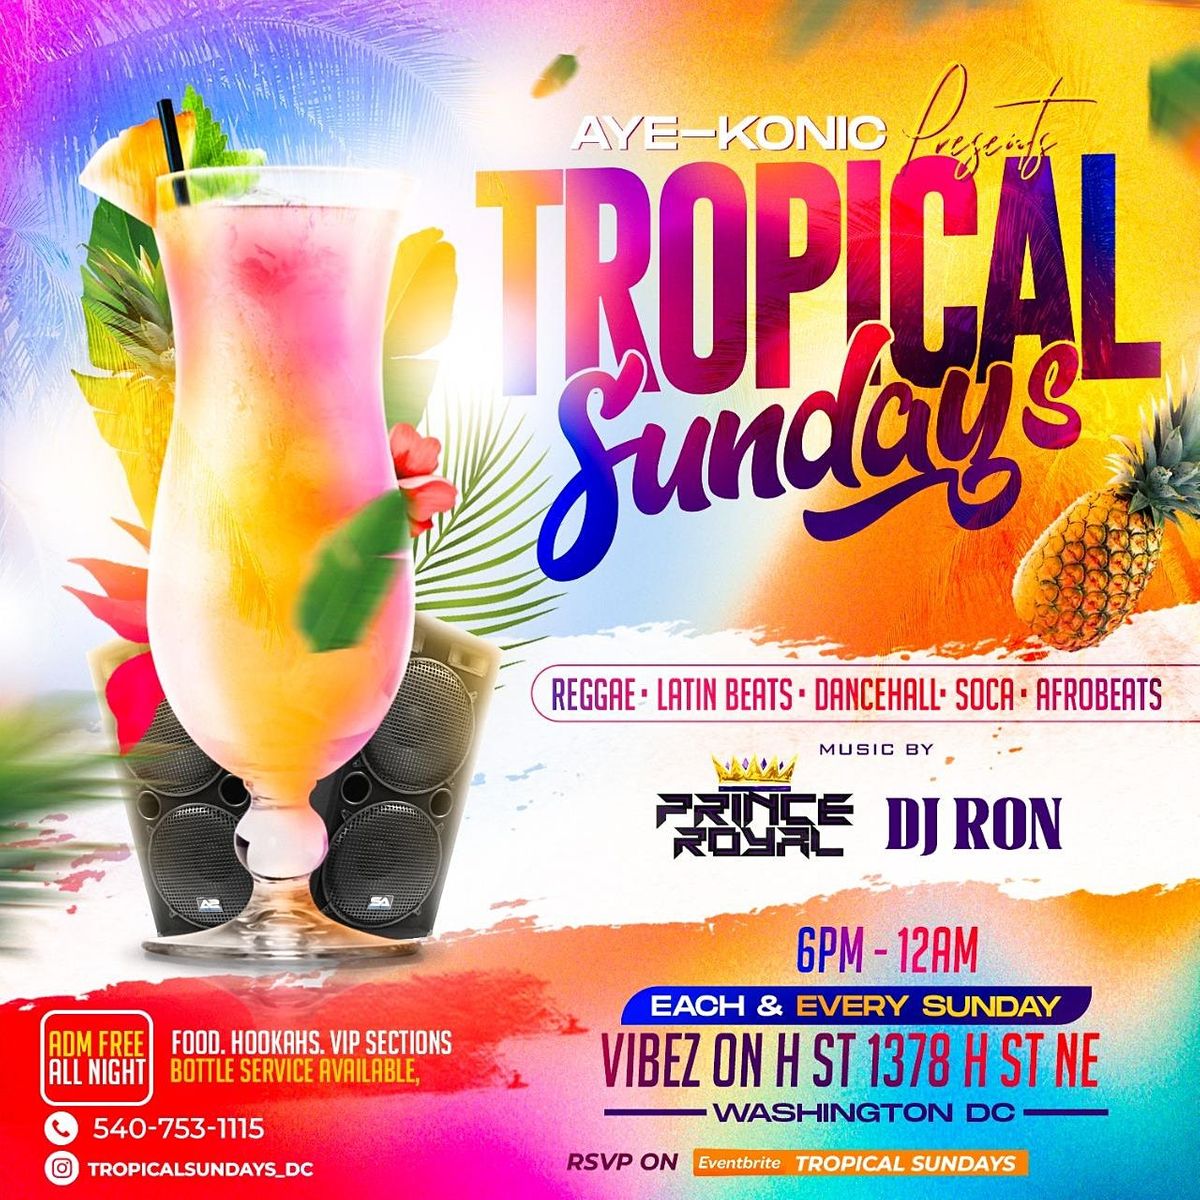 Tropical Sunday DC!